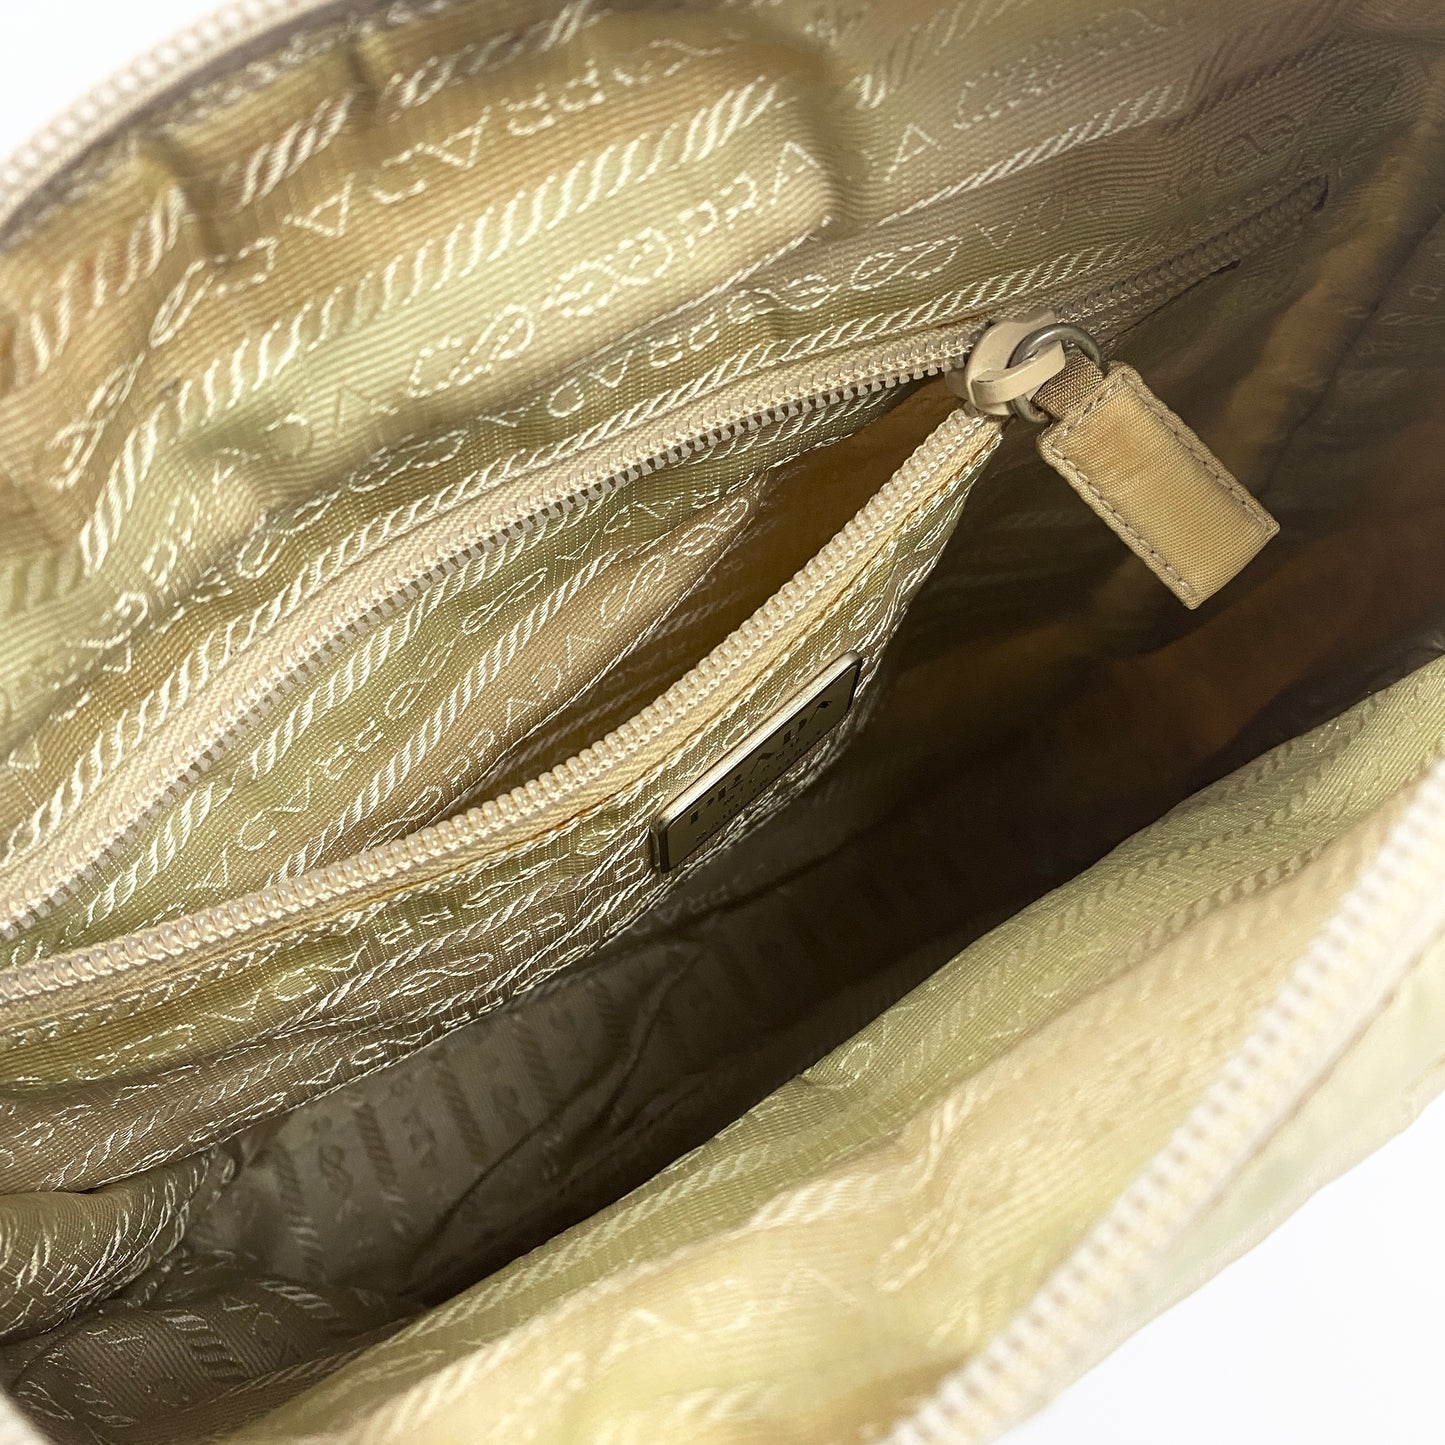 Vintage Prada purse / handbag